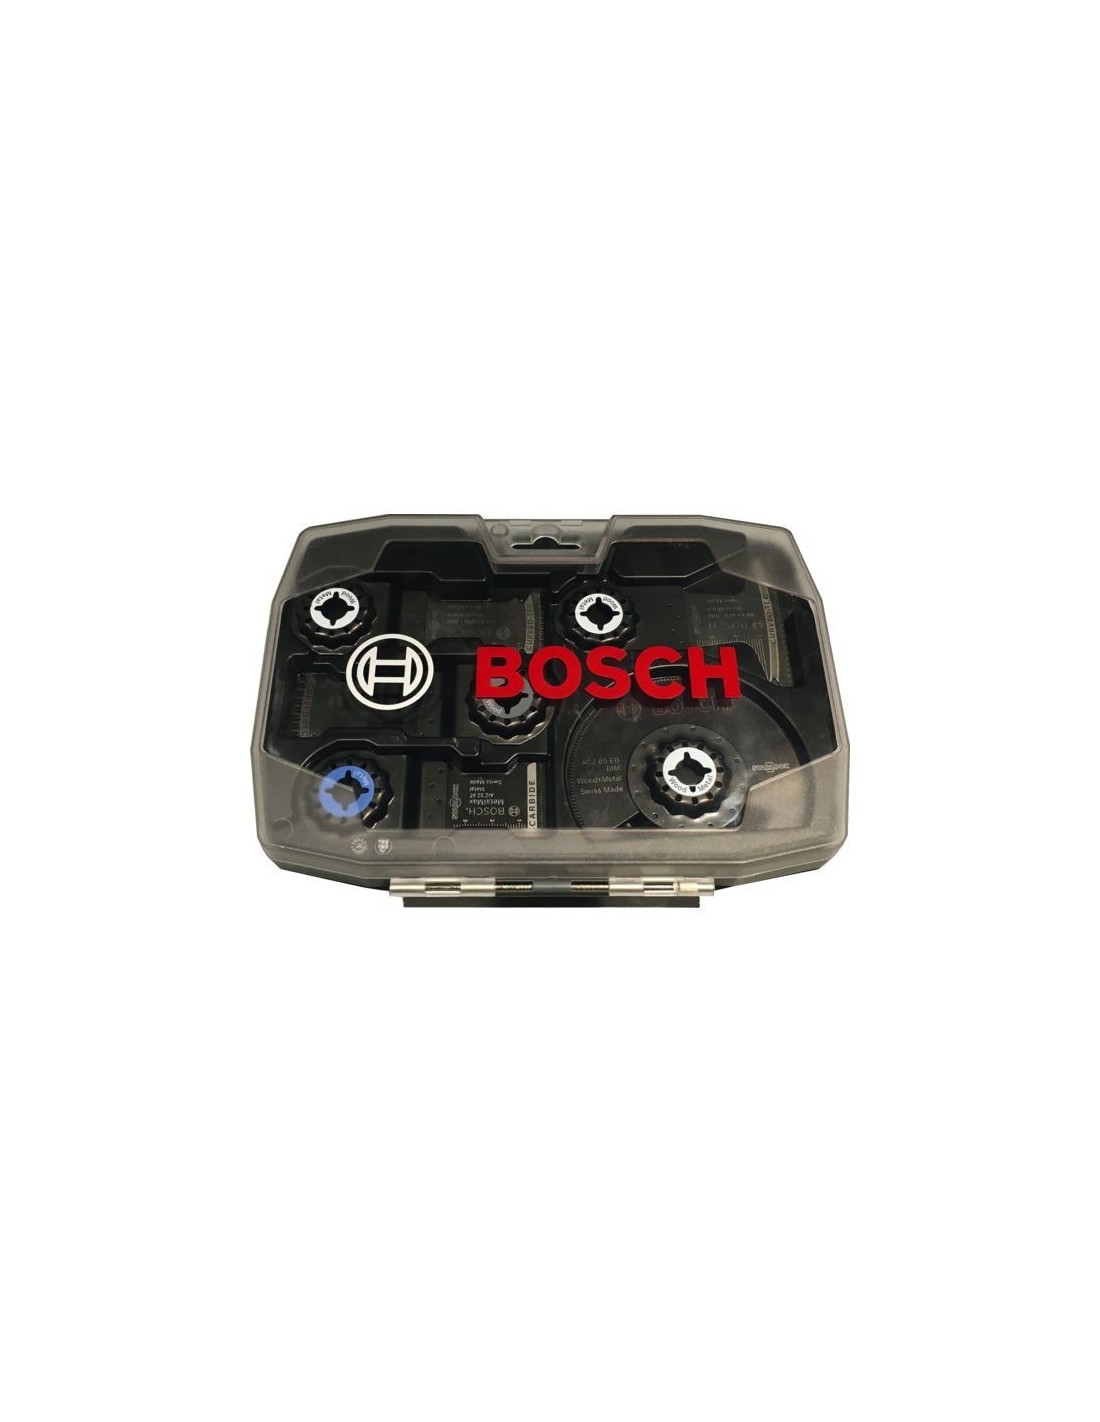 Coffret Starlock Cutting 5 lames outil multifonctions - Bosch Professional  - - 2608664131BOSCH ROBERT DÃ©partement Outillage